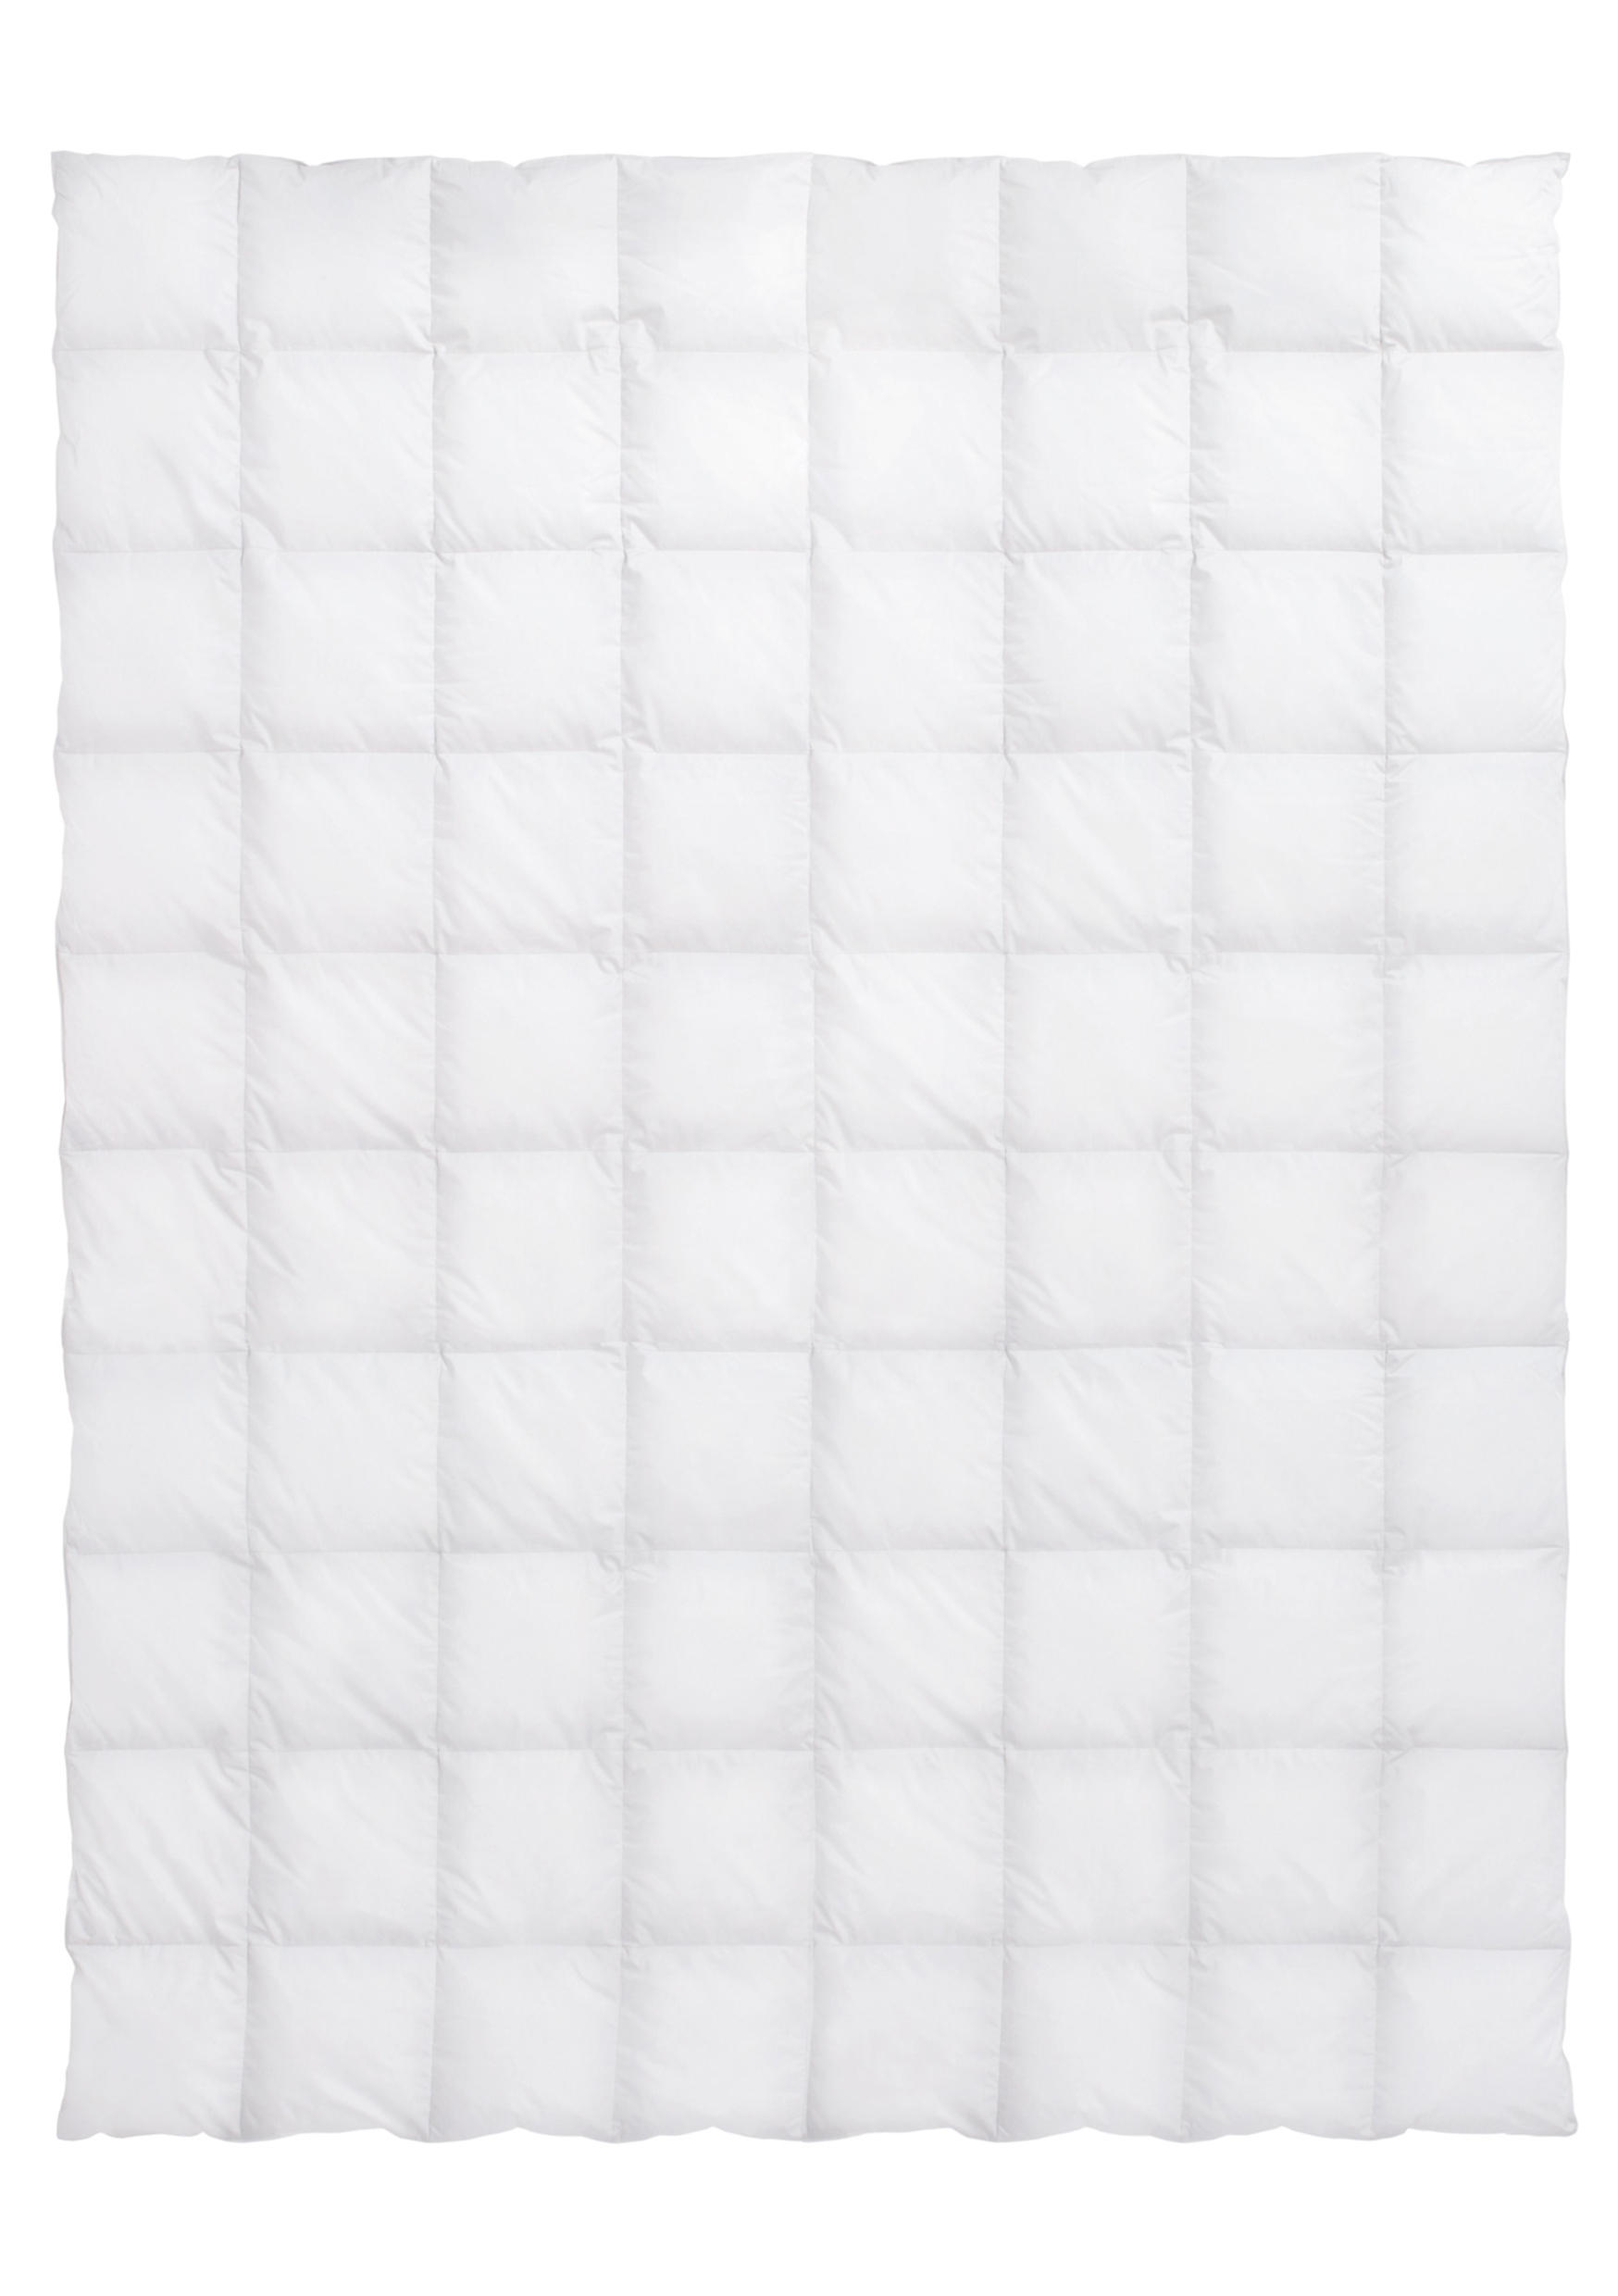 SOMMERBETT  Harmony  135/200 cm   - Weiß, Basics, Textil (135/200cm) - Centa-Star